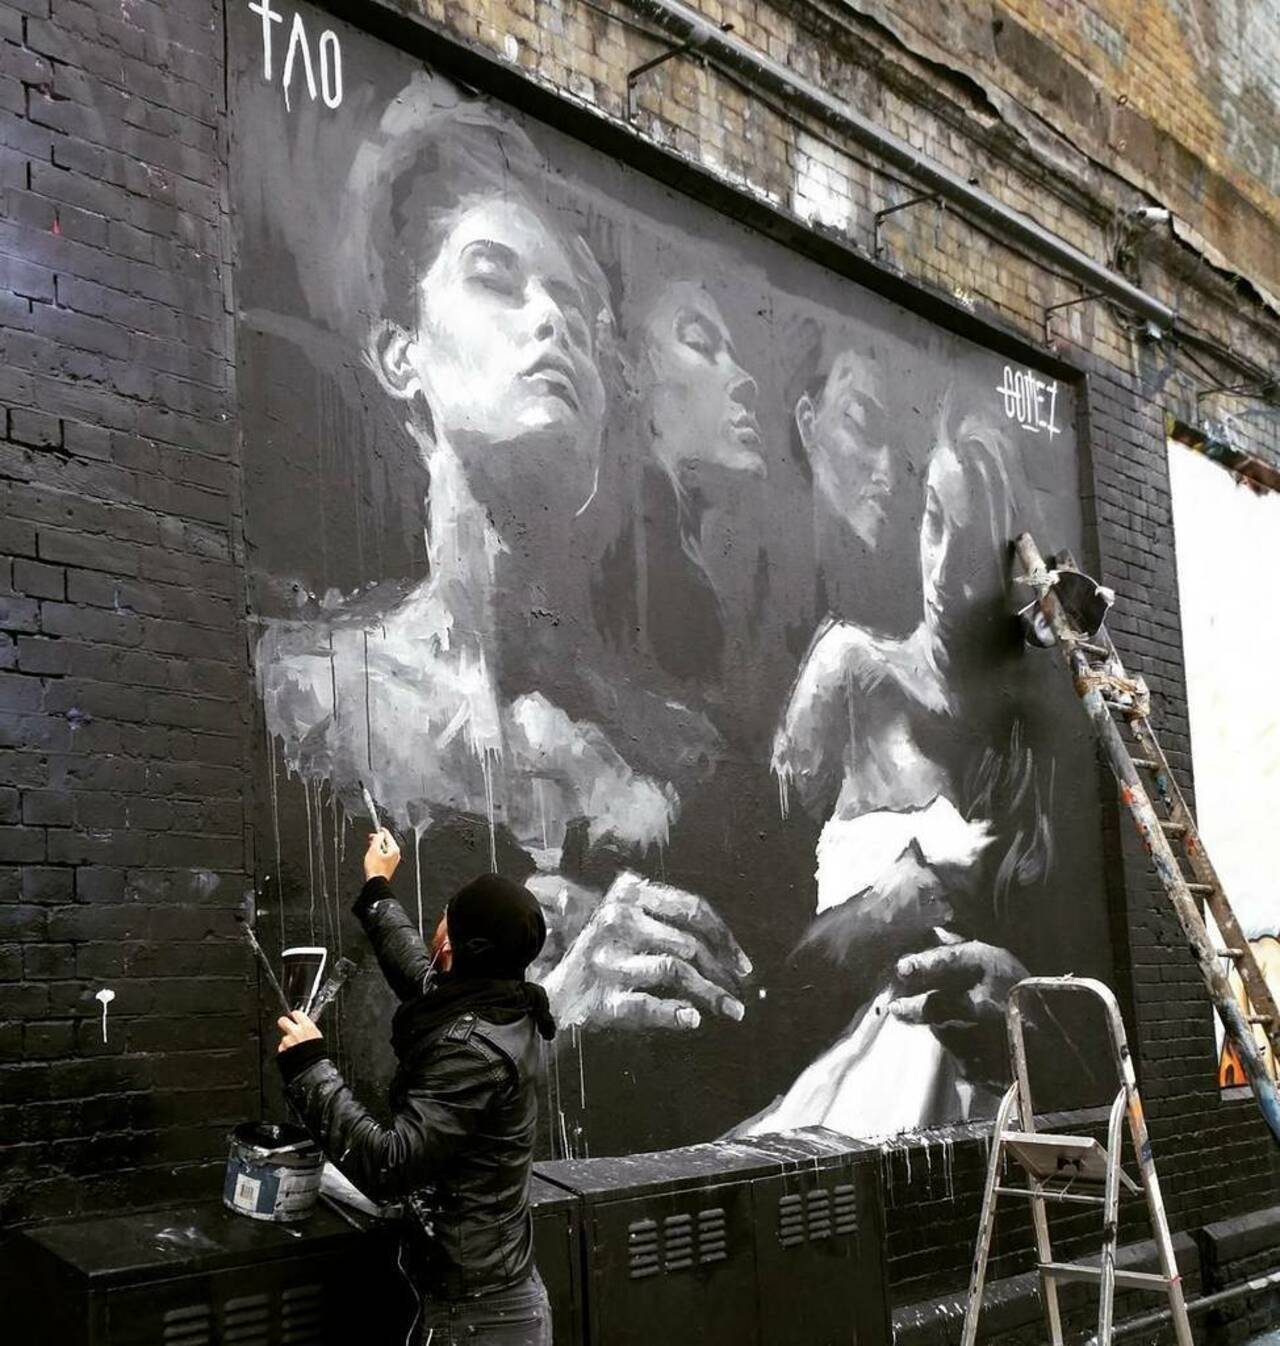 RT @StArtEverywhere: Great piece going up by #TaoGomez #StreetArt #StreetArtLondon #LondonStreetArt #London #Graffiti #GraffitiLondon #I… http://t.co/q11pvEhyW8